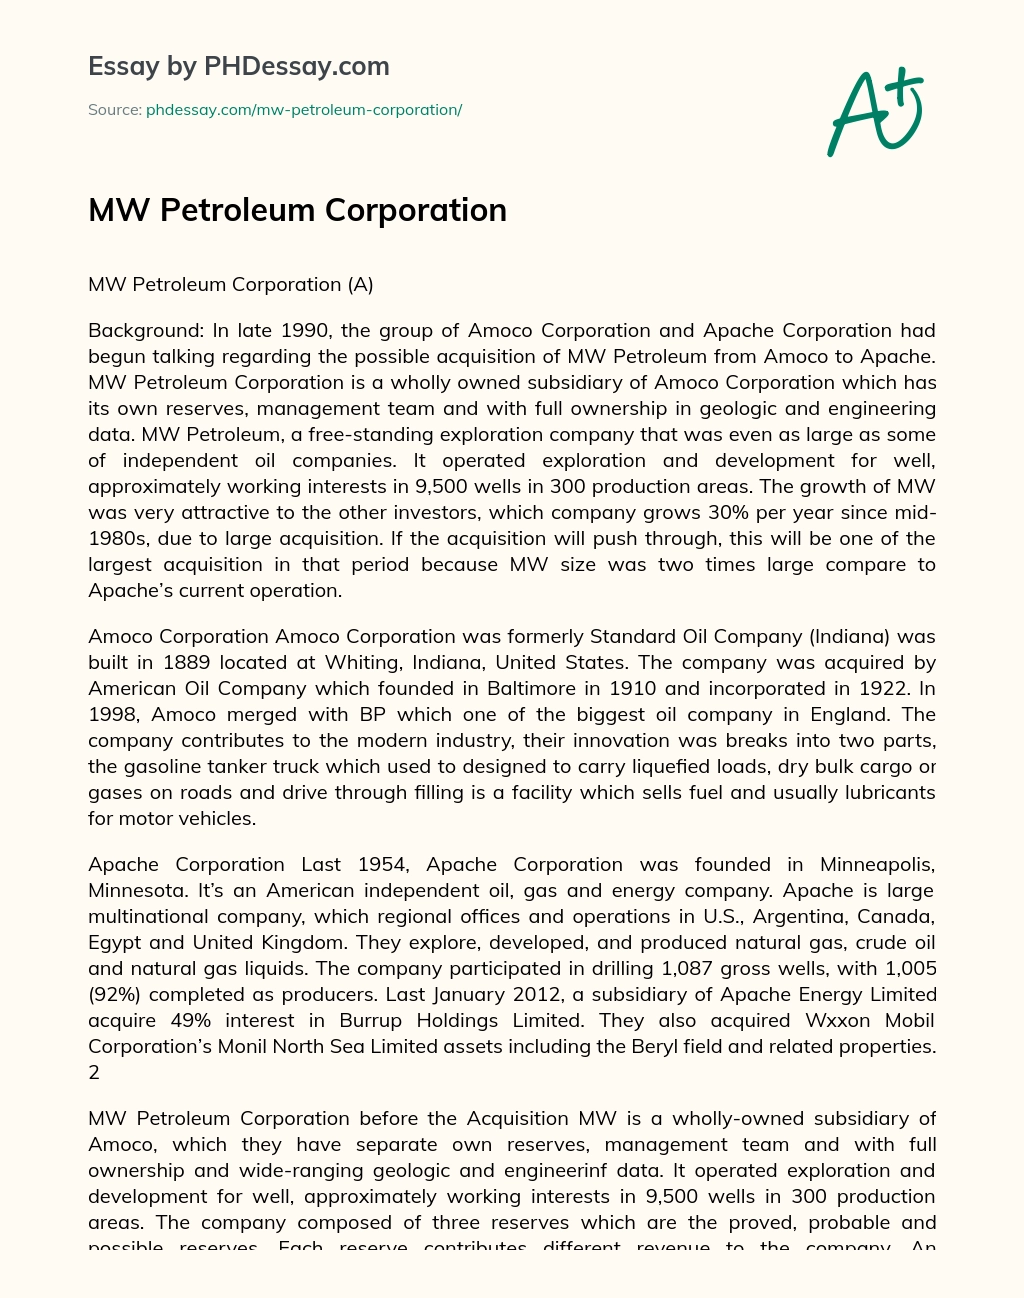 MW Petroleum Corporation essay